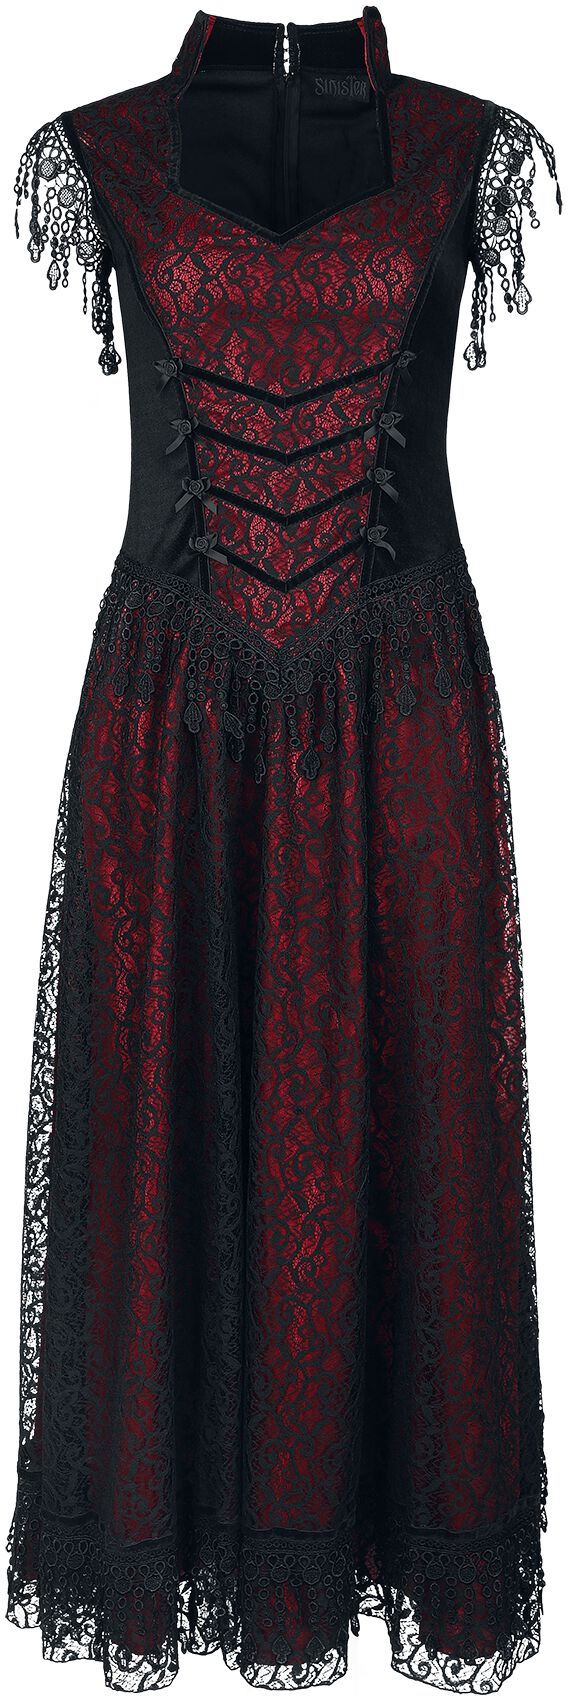 Sinister Gothic - Gothic Dress - Kleid lang - schwarz|rot